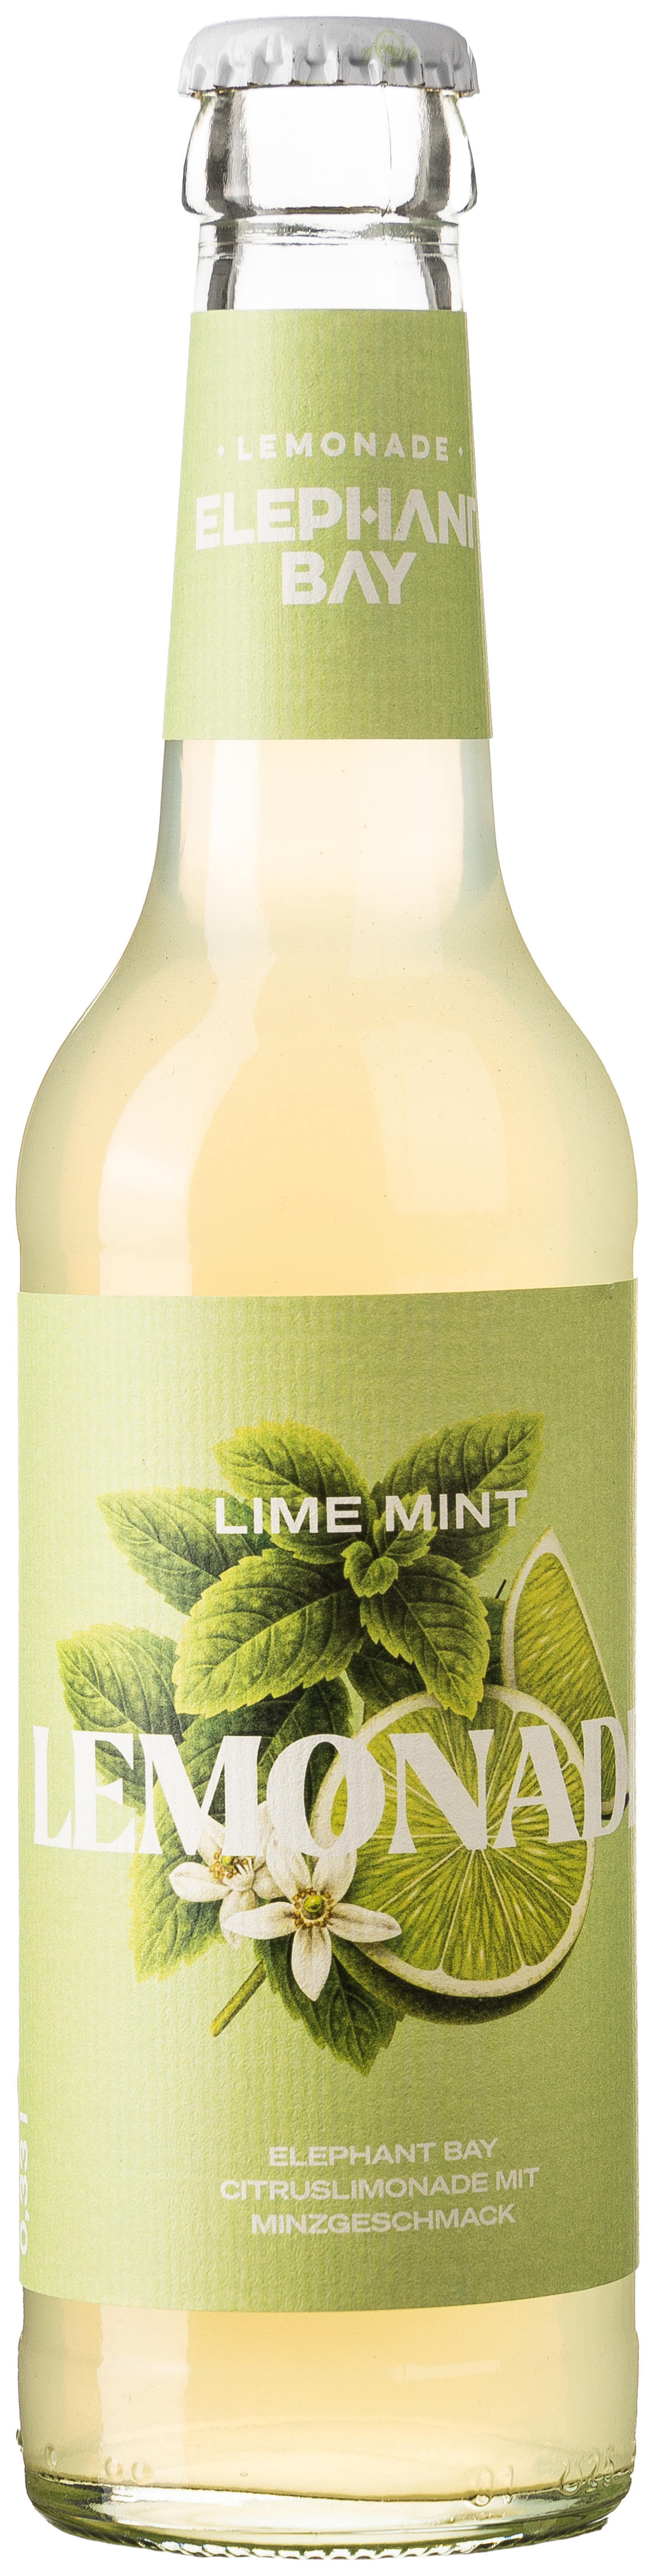 Elephant Bay Lime Mint Lemonade 0,33L MEHRWEG 